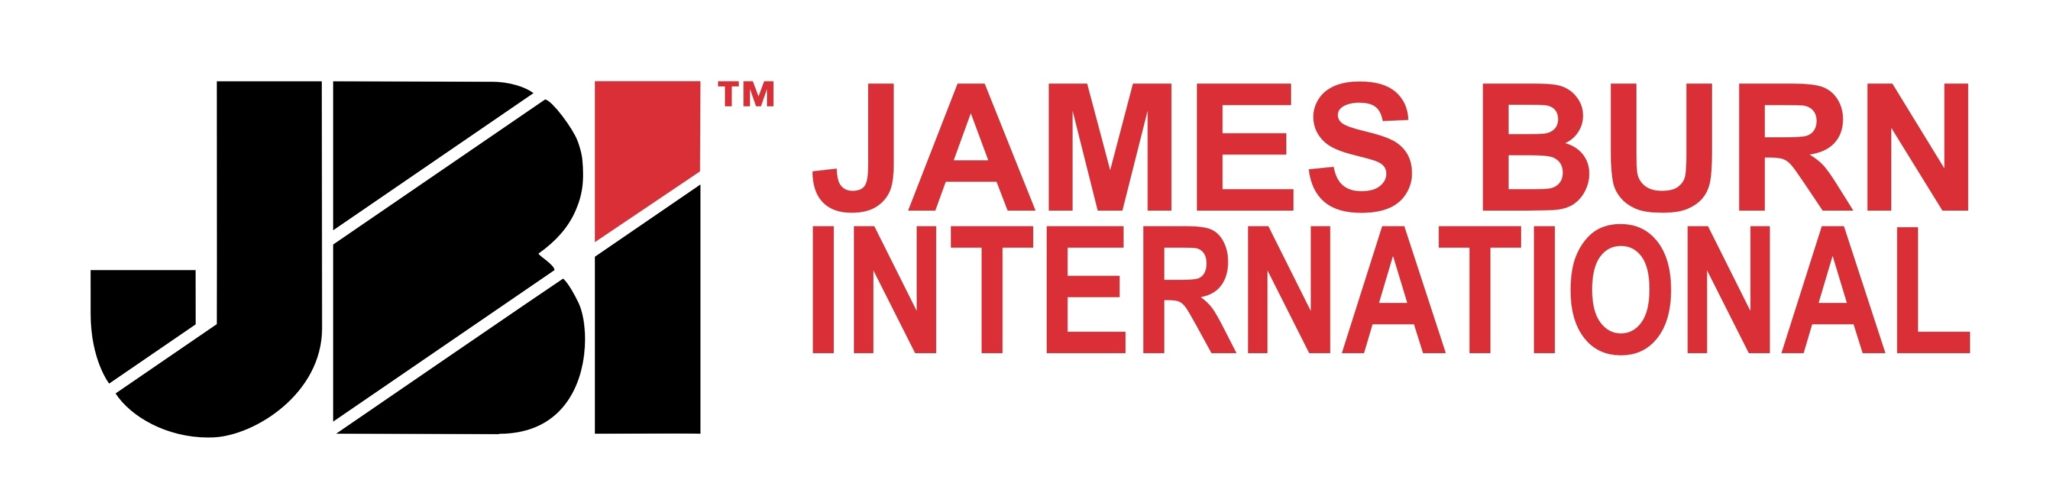 JBI James Burn International